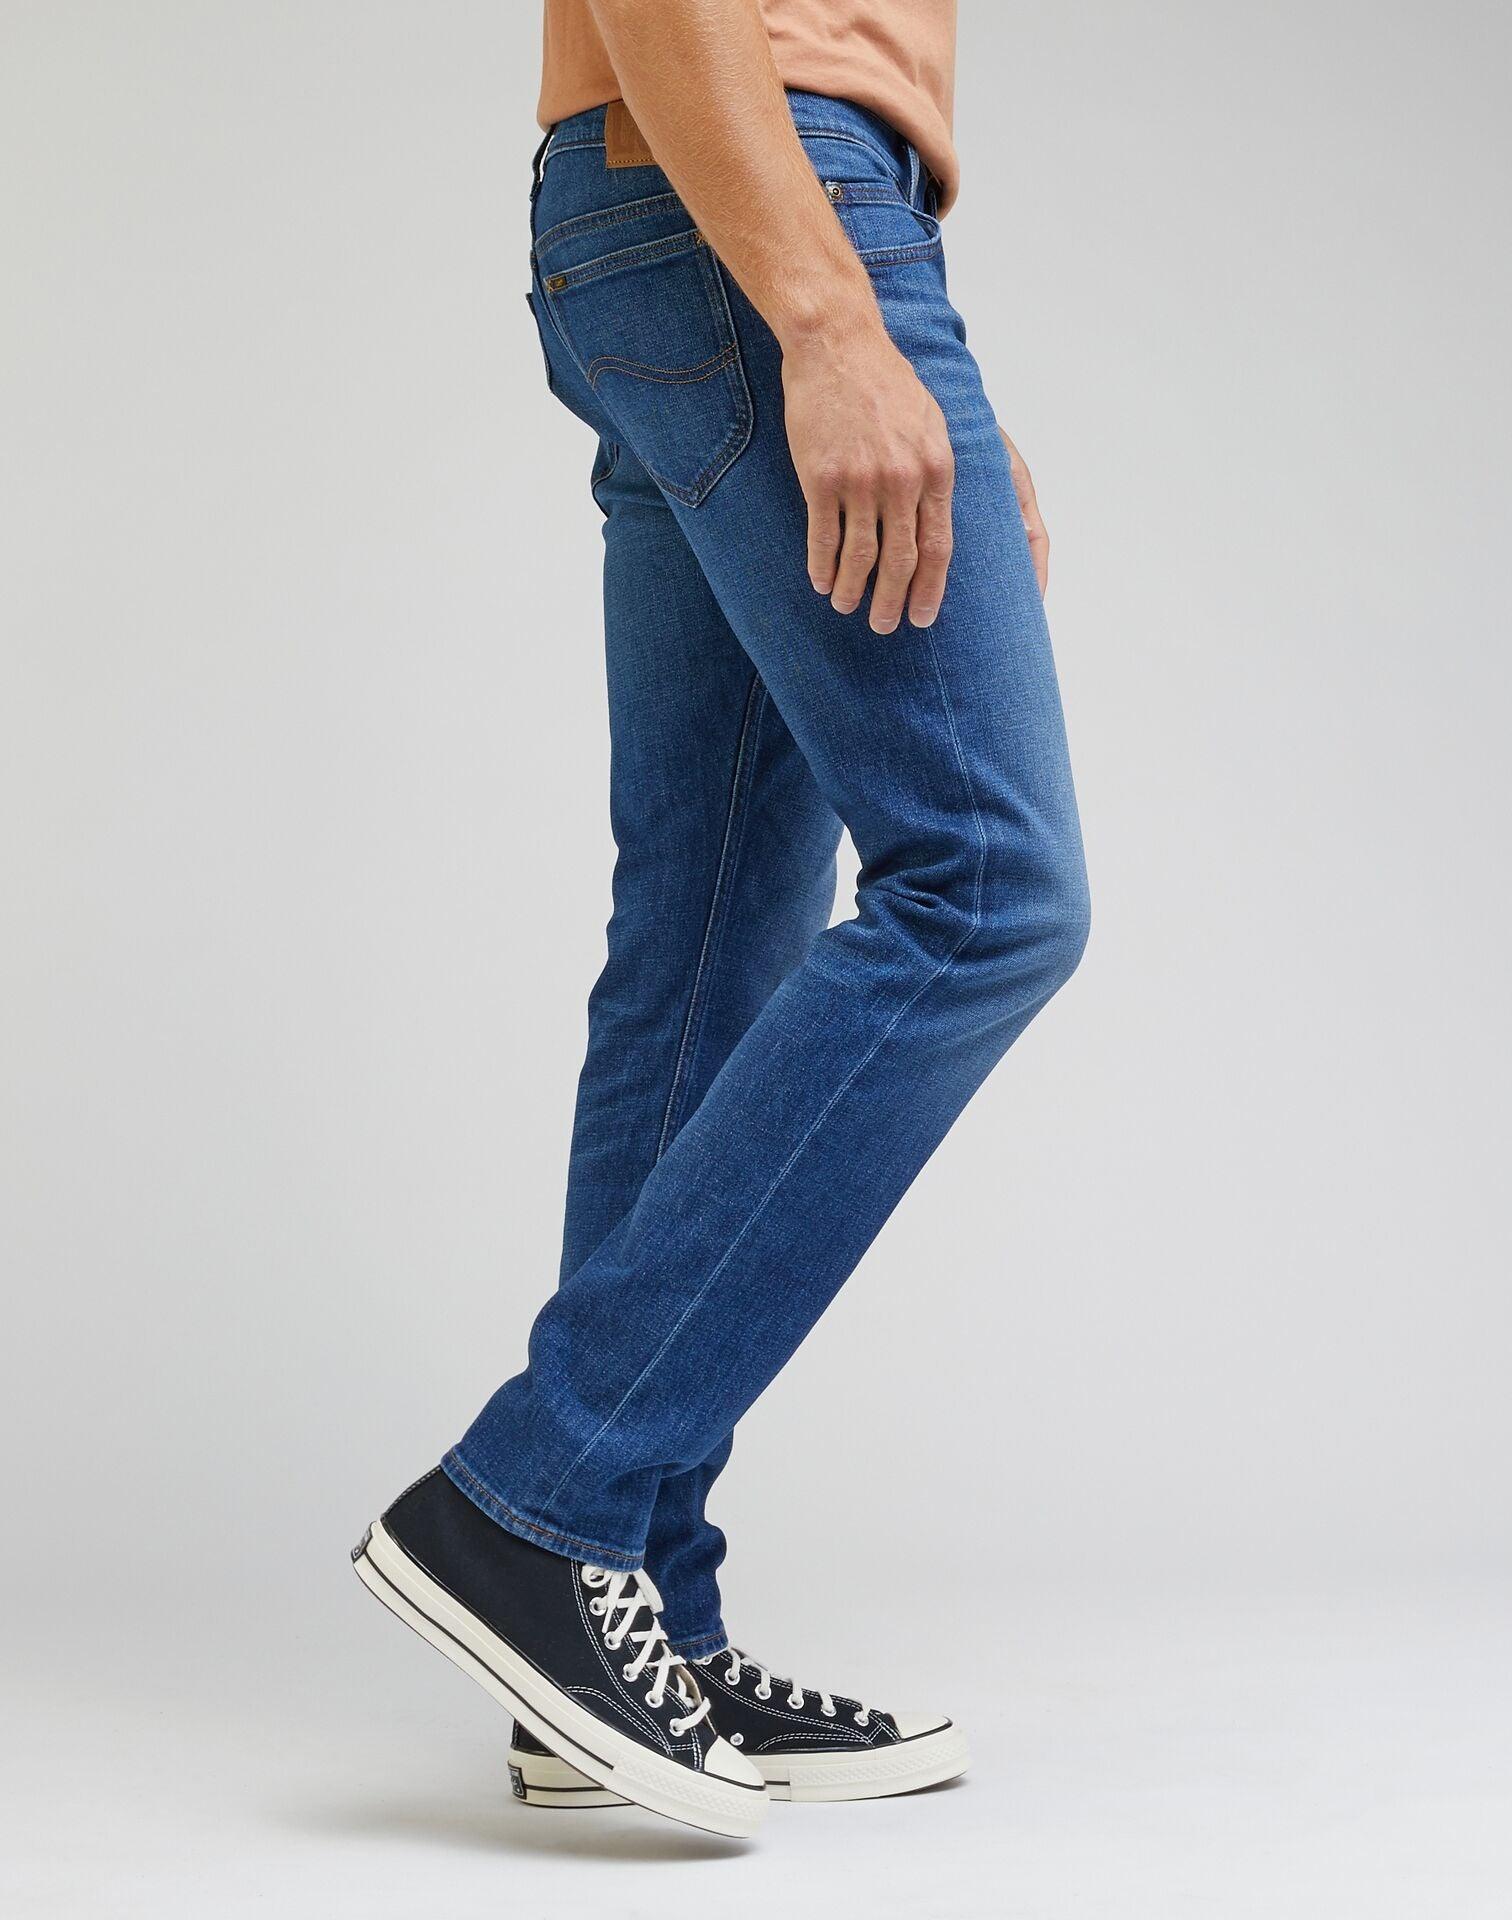 LEE - ג'ינס WORN IN RIDER בצבע כחול - MASHBIR//365